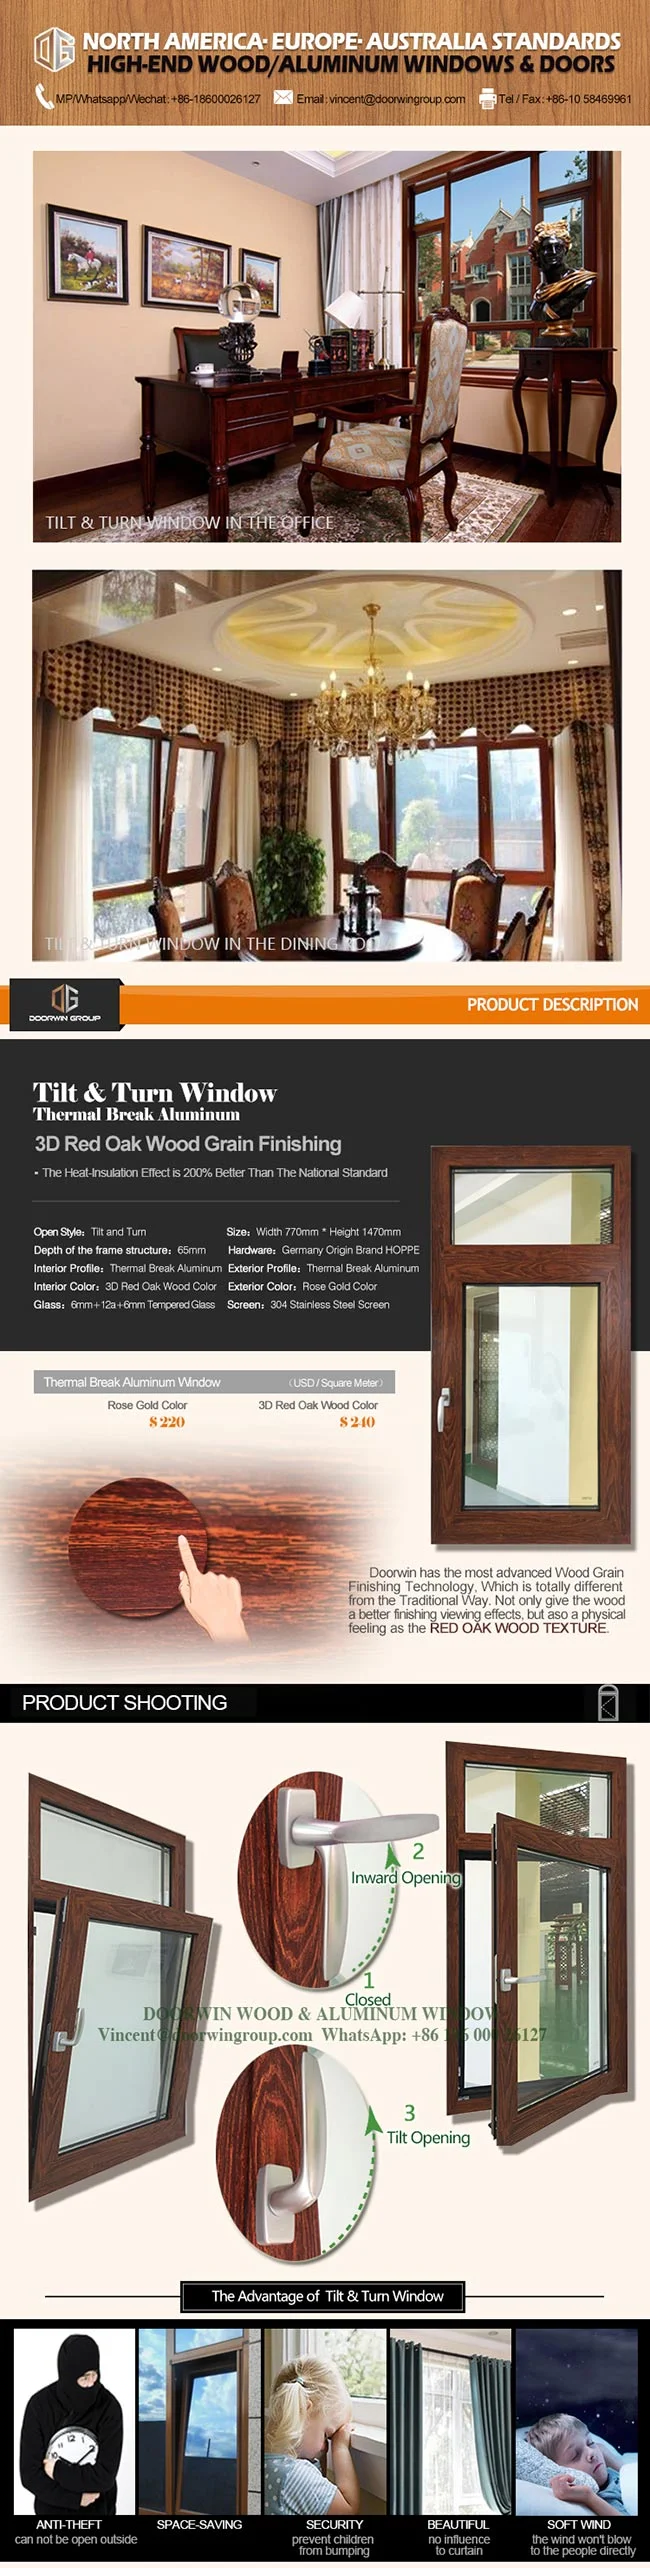 Thermal Break Aluminum Tilt & Turn Window Wood Grain/Fluorocarbon/Powder Coating Aluminum Surface Tilt Window